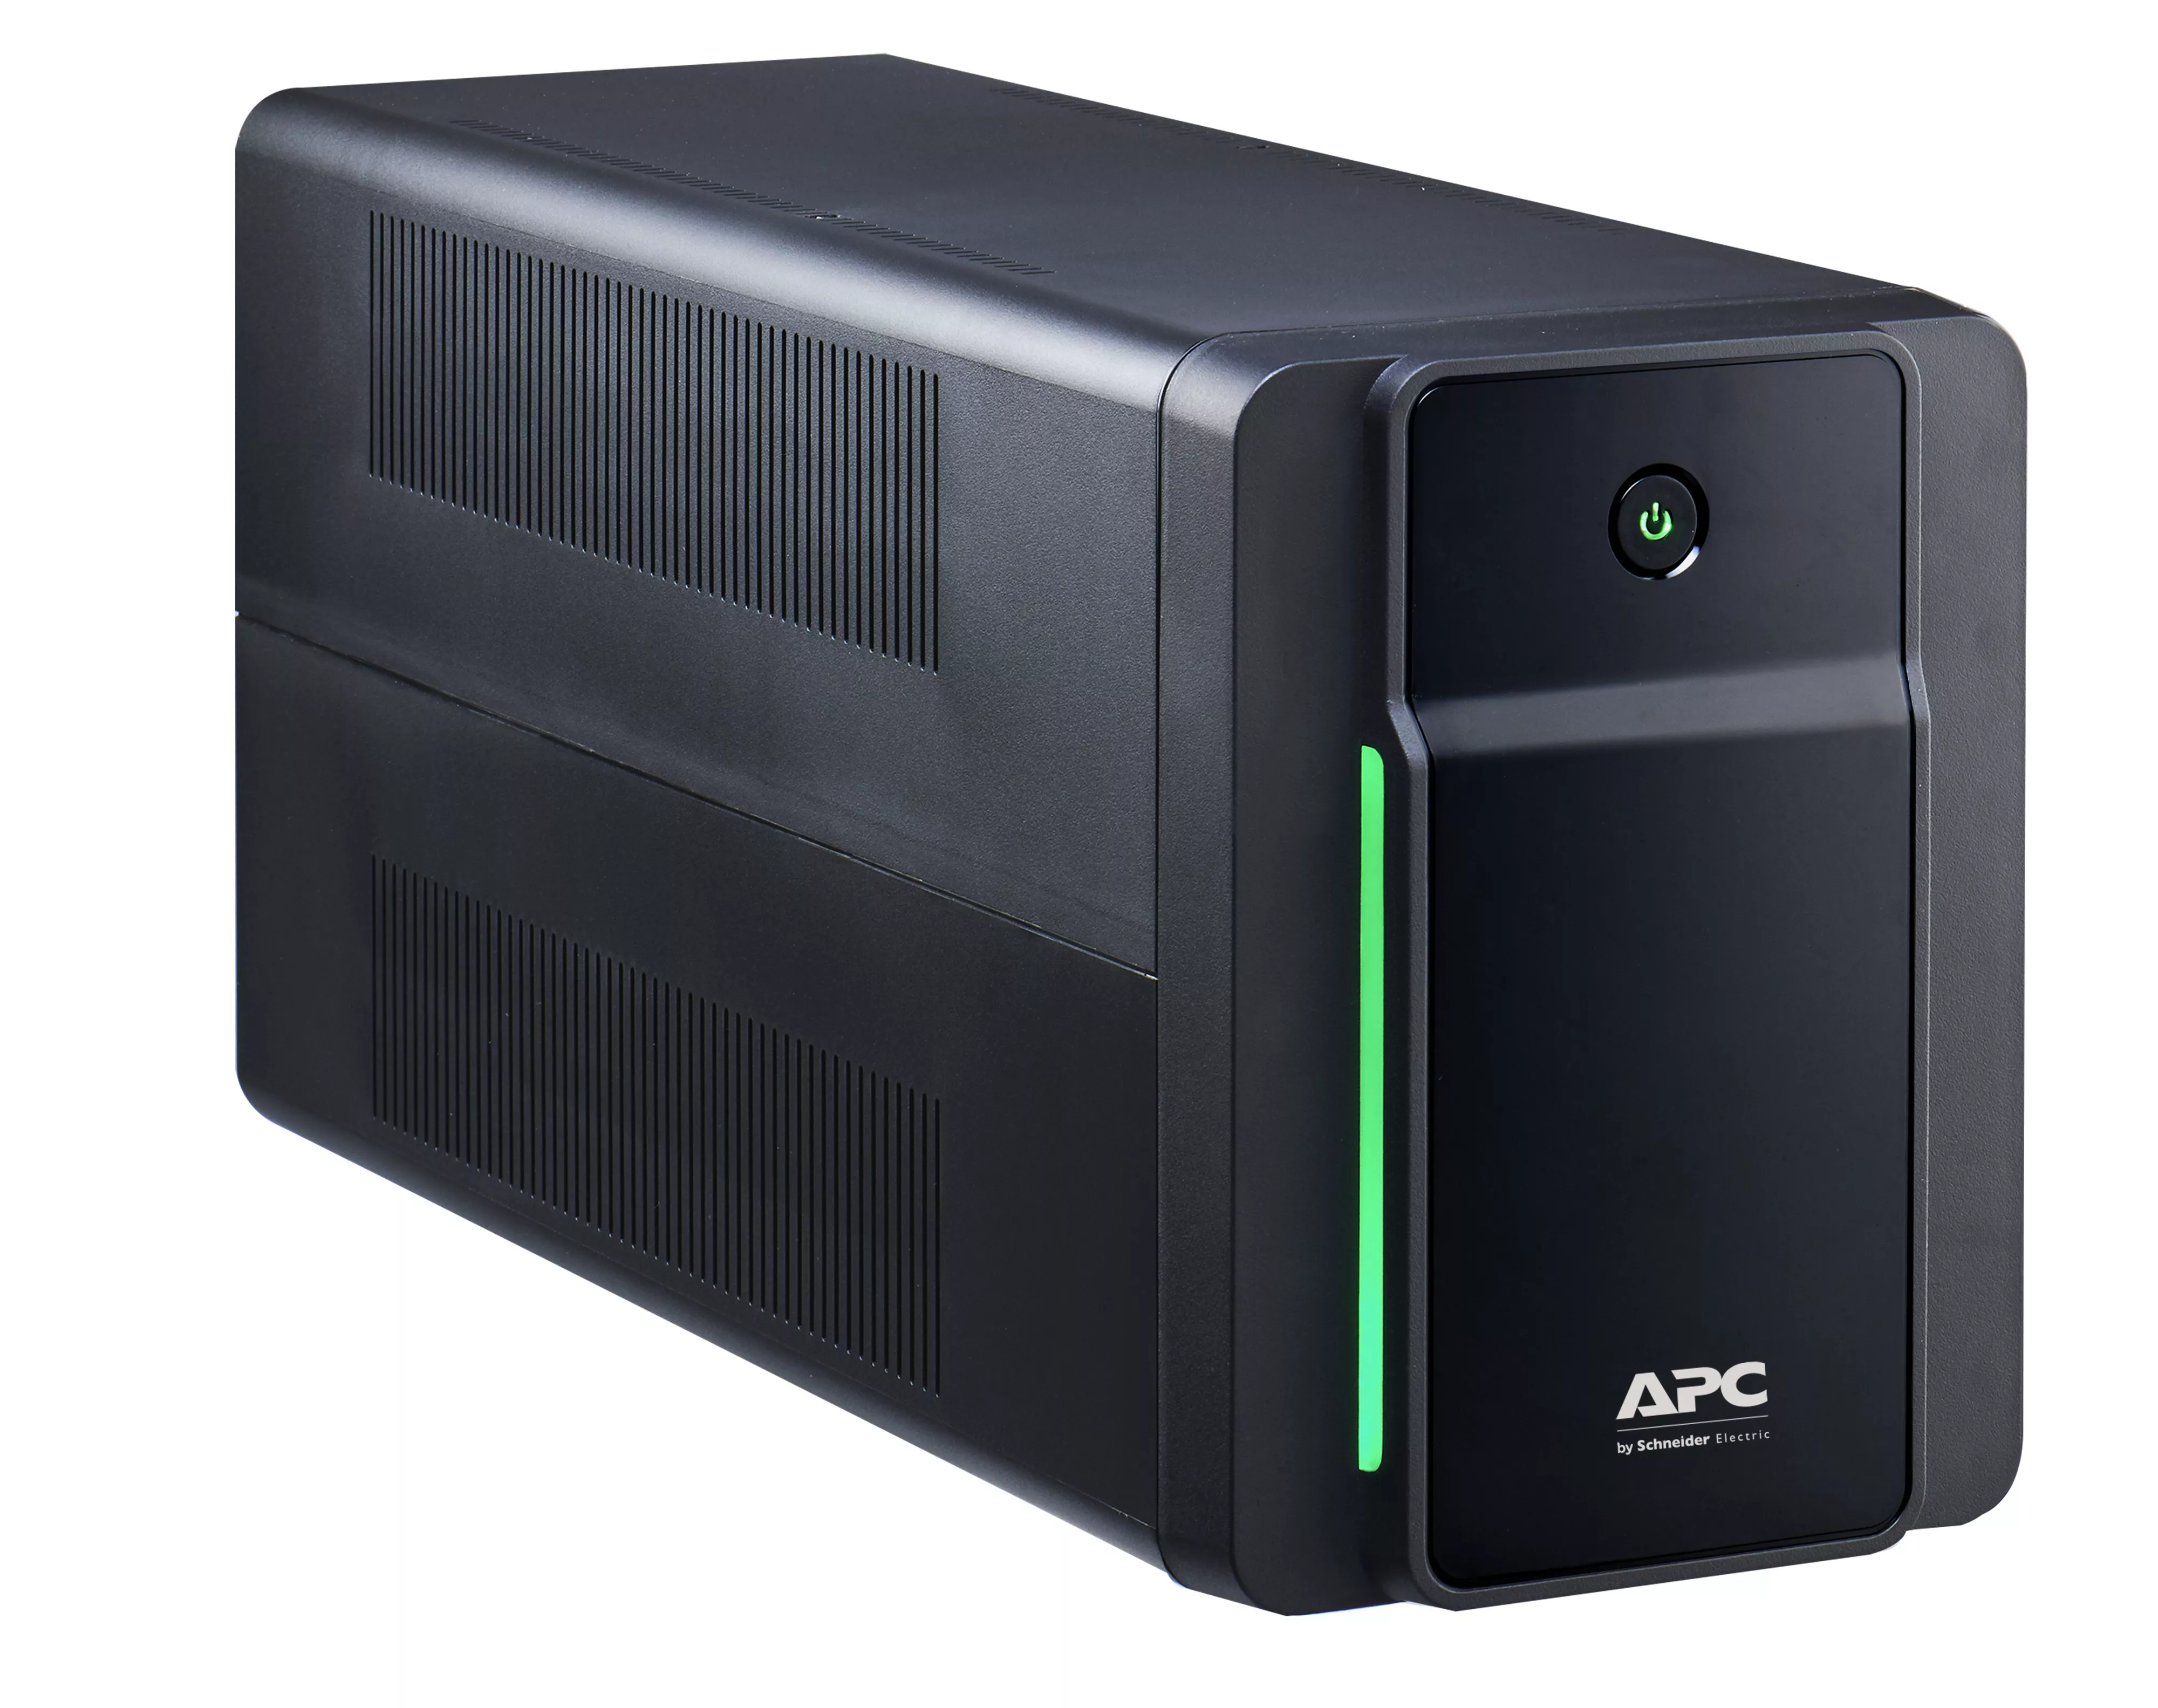 Achat APC Back-UPS 1200VA 230V AVR IEC Sockets au meilleur prix